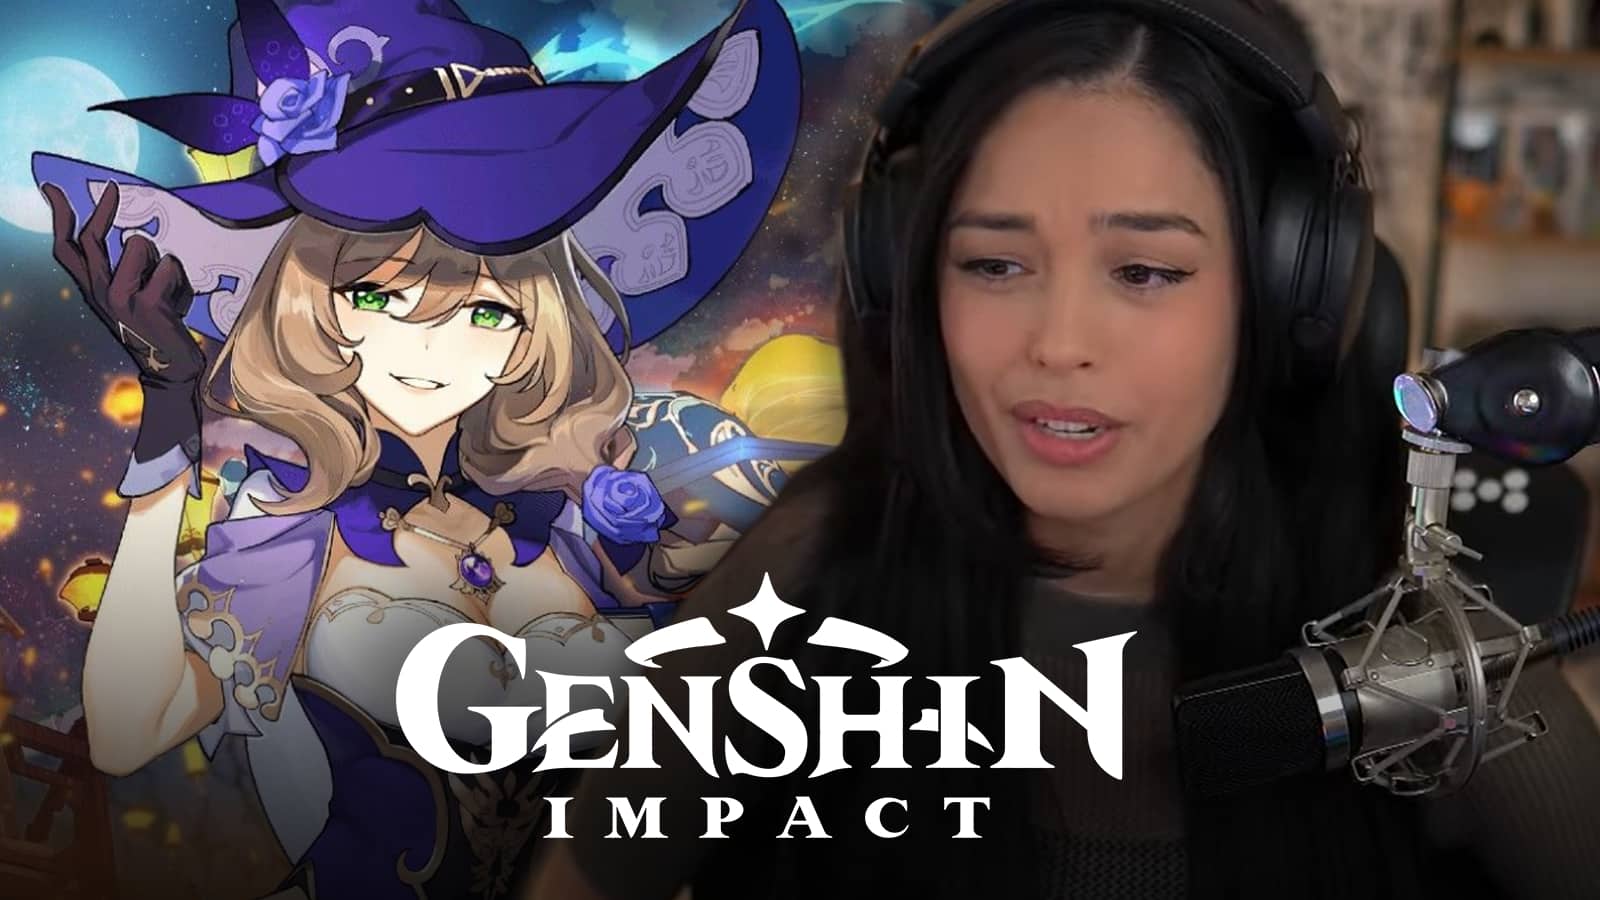 Valkyrae looks worried next to Genshin Impact character.